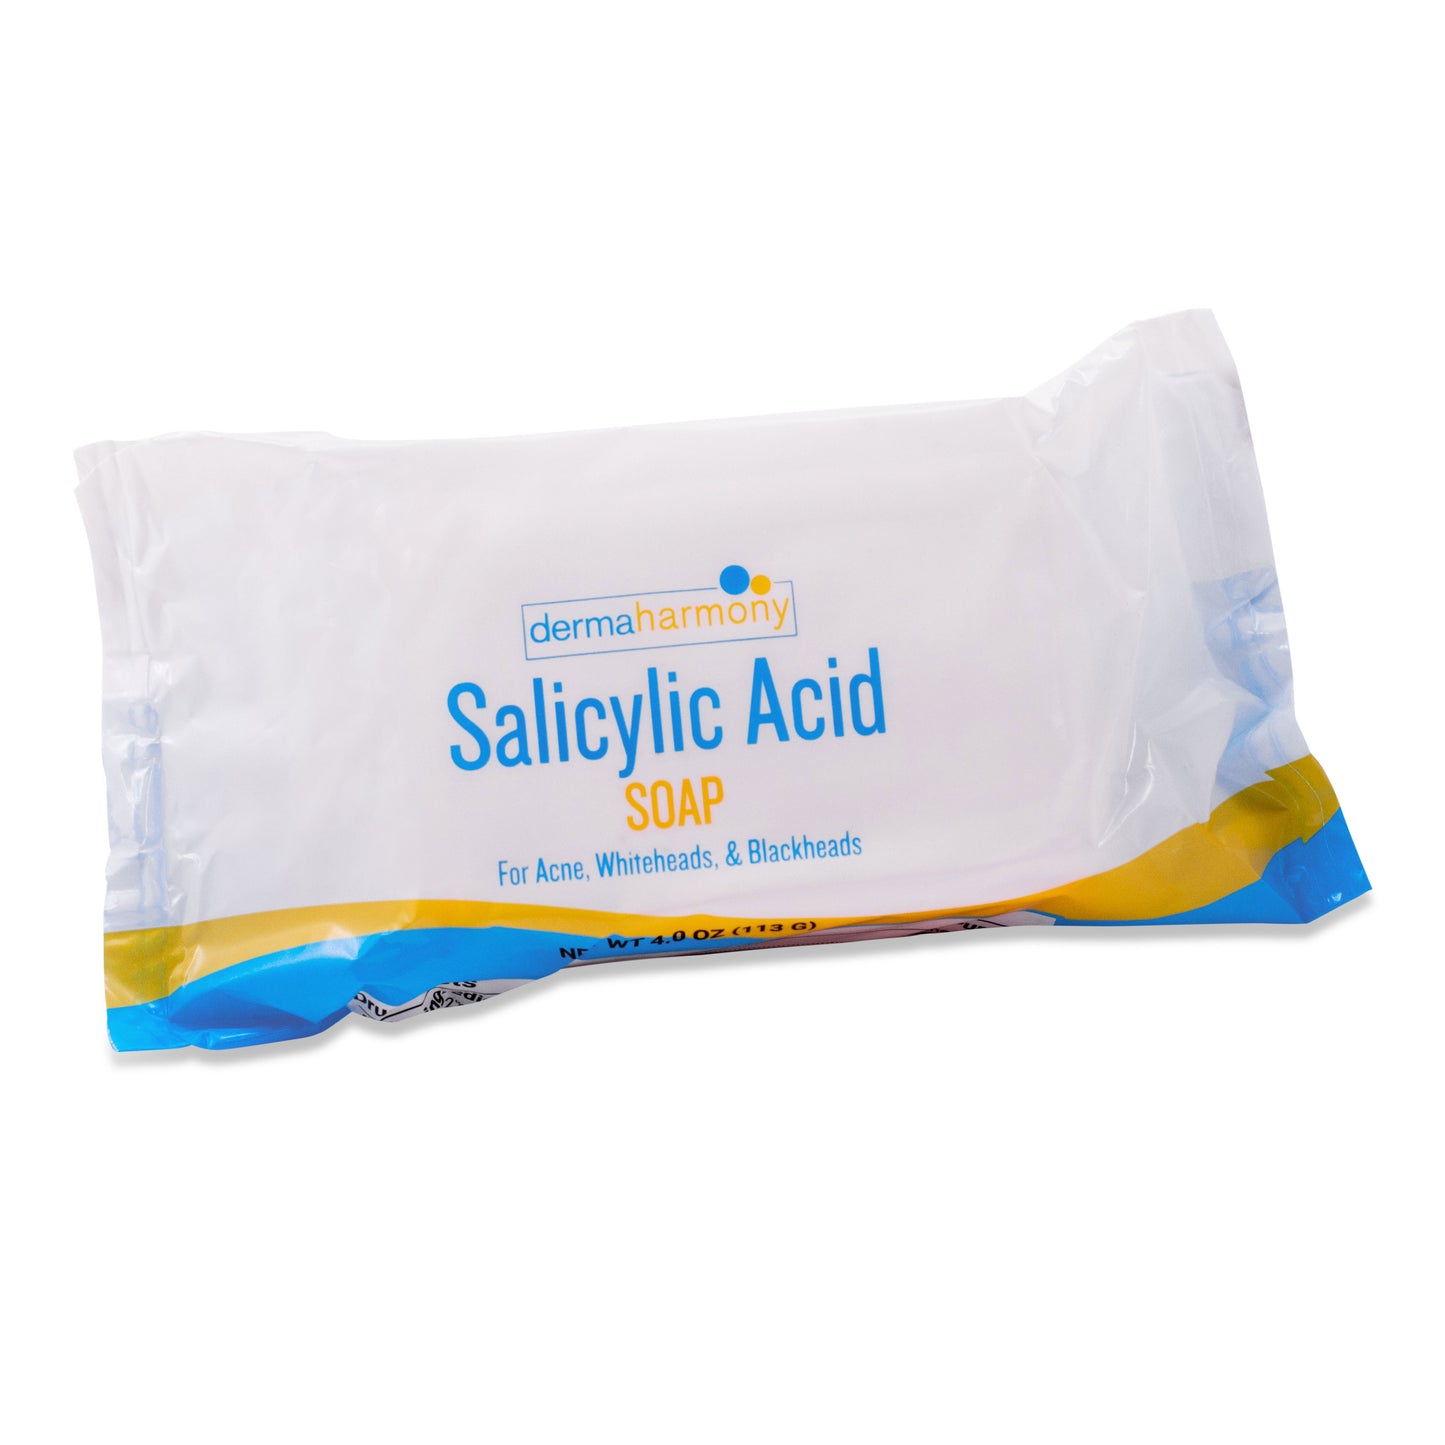 2% Salicylic Acid Body & Facial Bar Soap